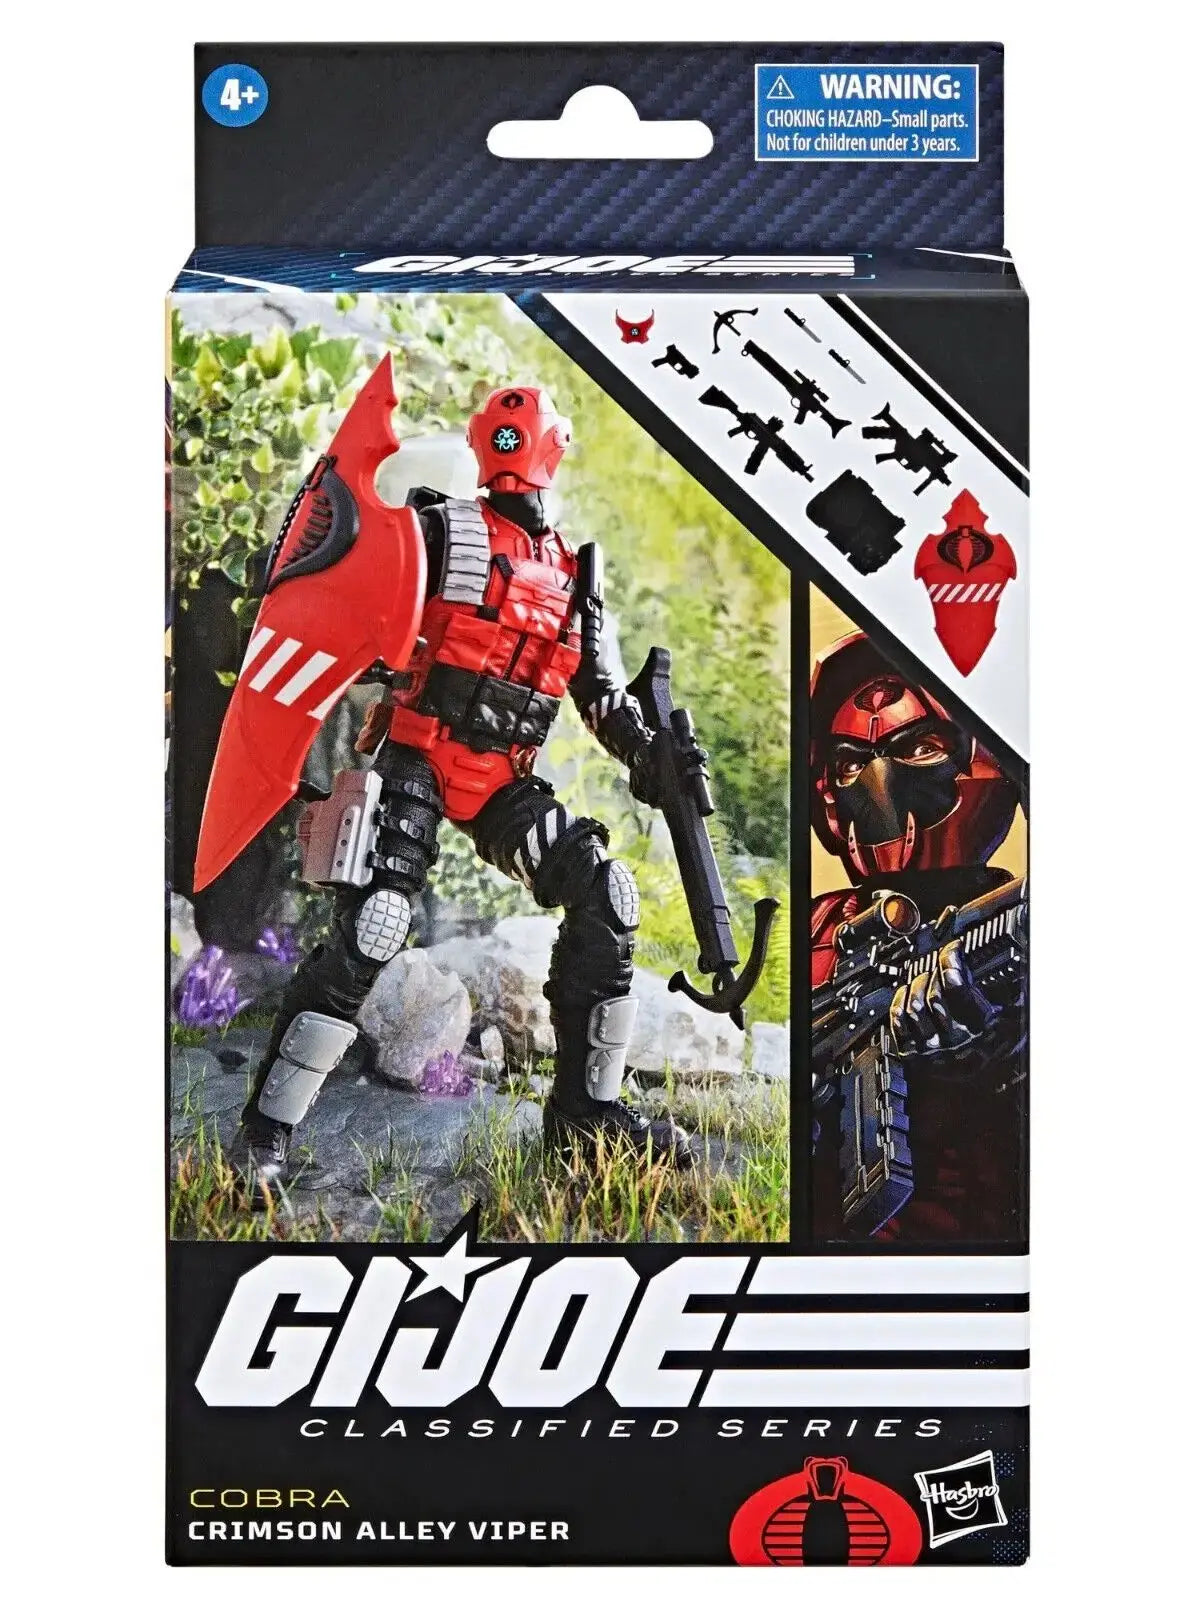 In Stock G.I. Joe GI Joe Classified Series 6" 091 Crimson Alley Viper Walmrt Action Figure Model Toy Hobby Gift